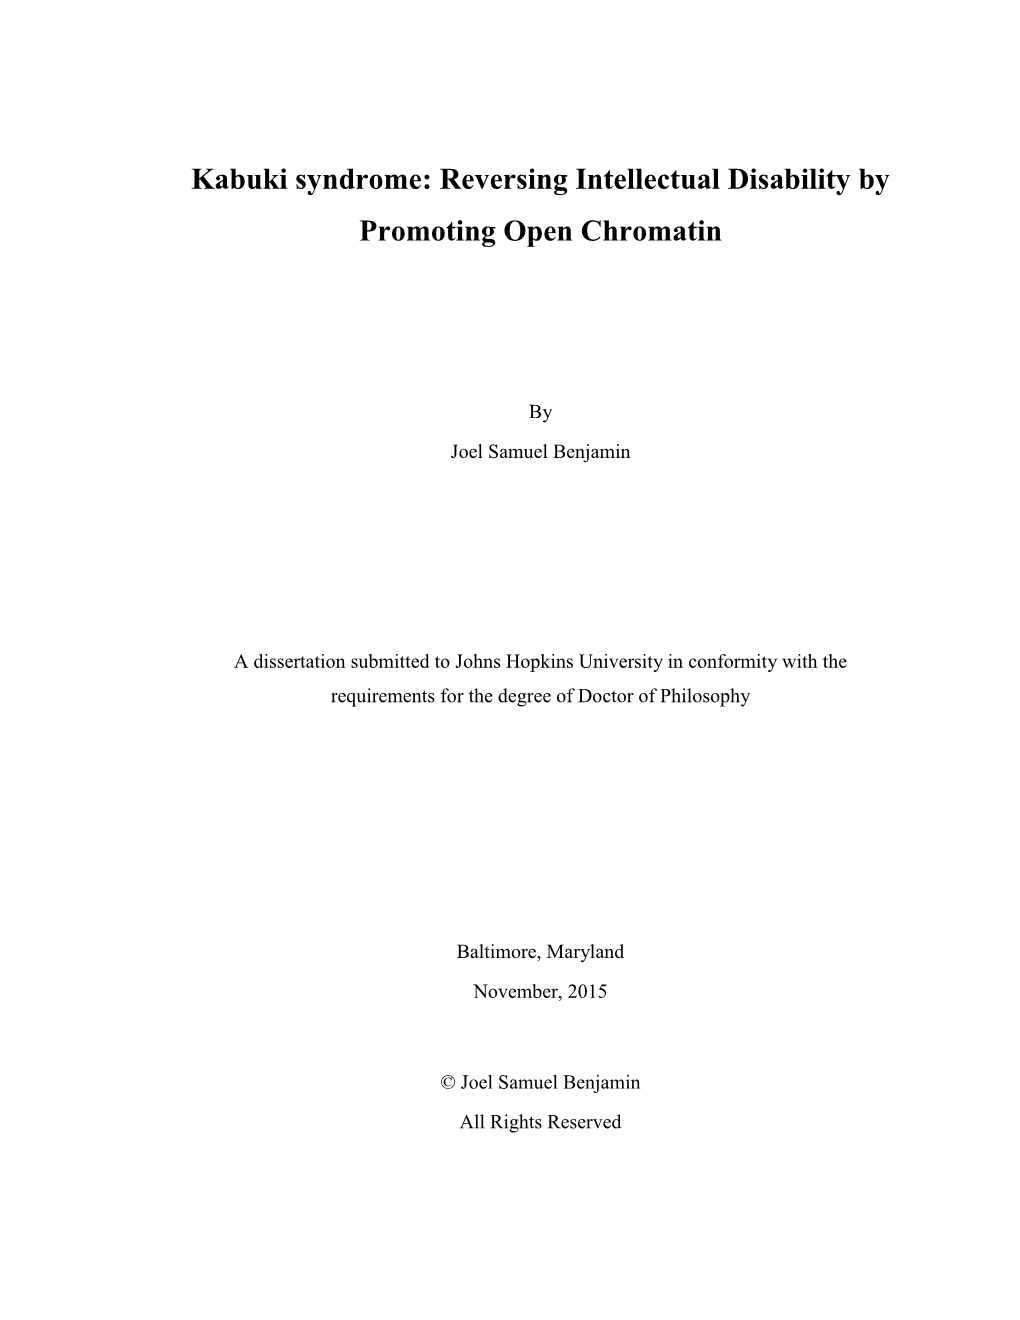 Kabuki Syndrome: Reversing Intellectual Disability by Promoting Open Chromatin